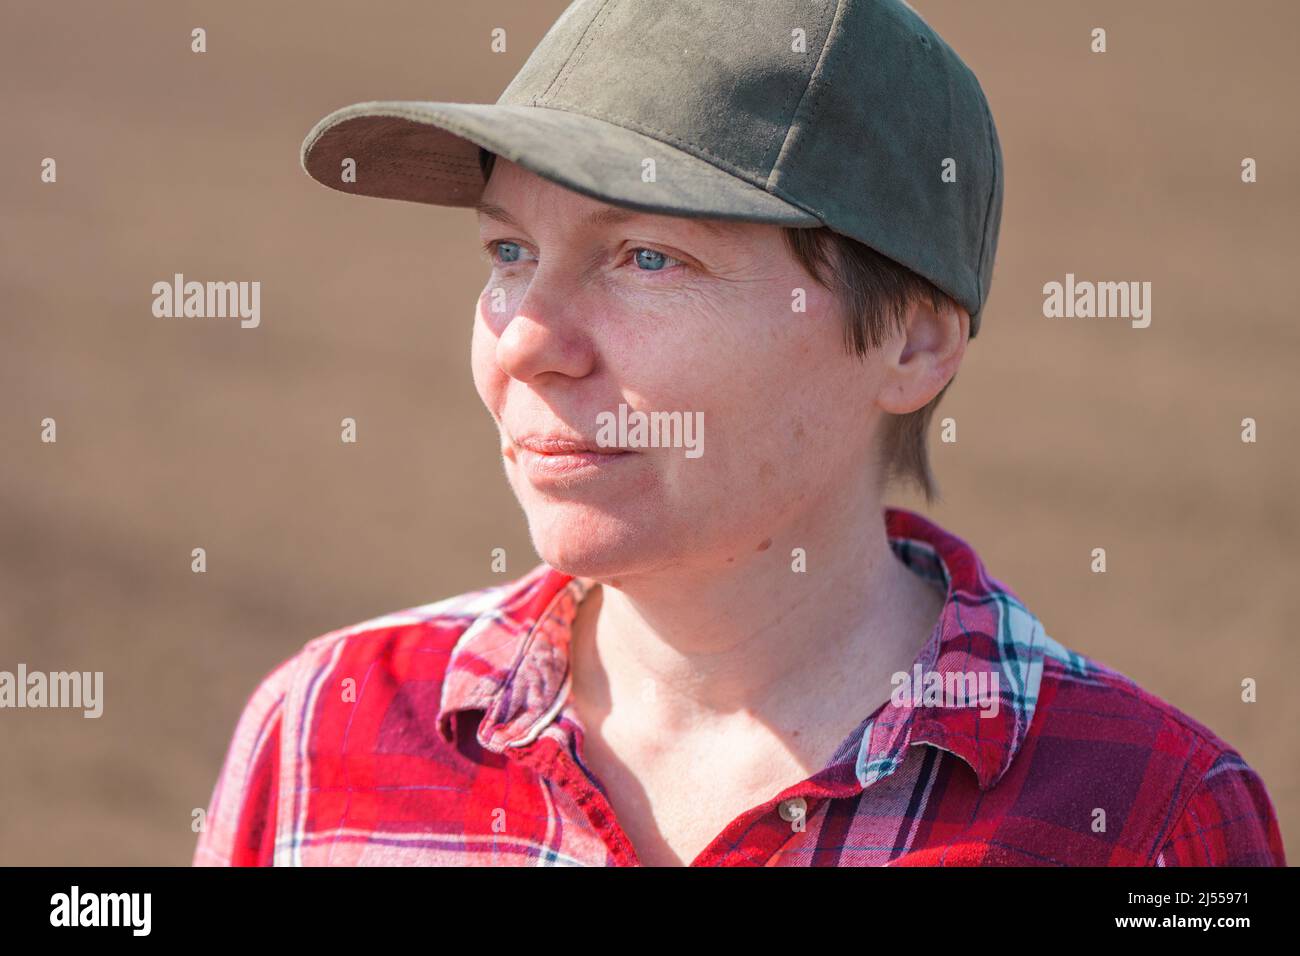 Farmerin mit Baseballmütze und kariertes Hemd, Kopfschuss-Porträt auf dem Feld, selektiver Fokus Stockfoto